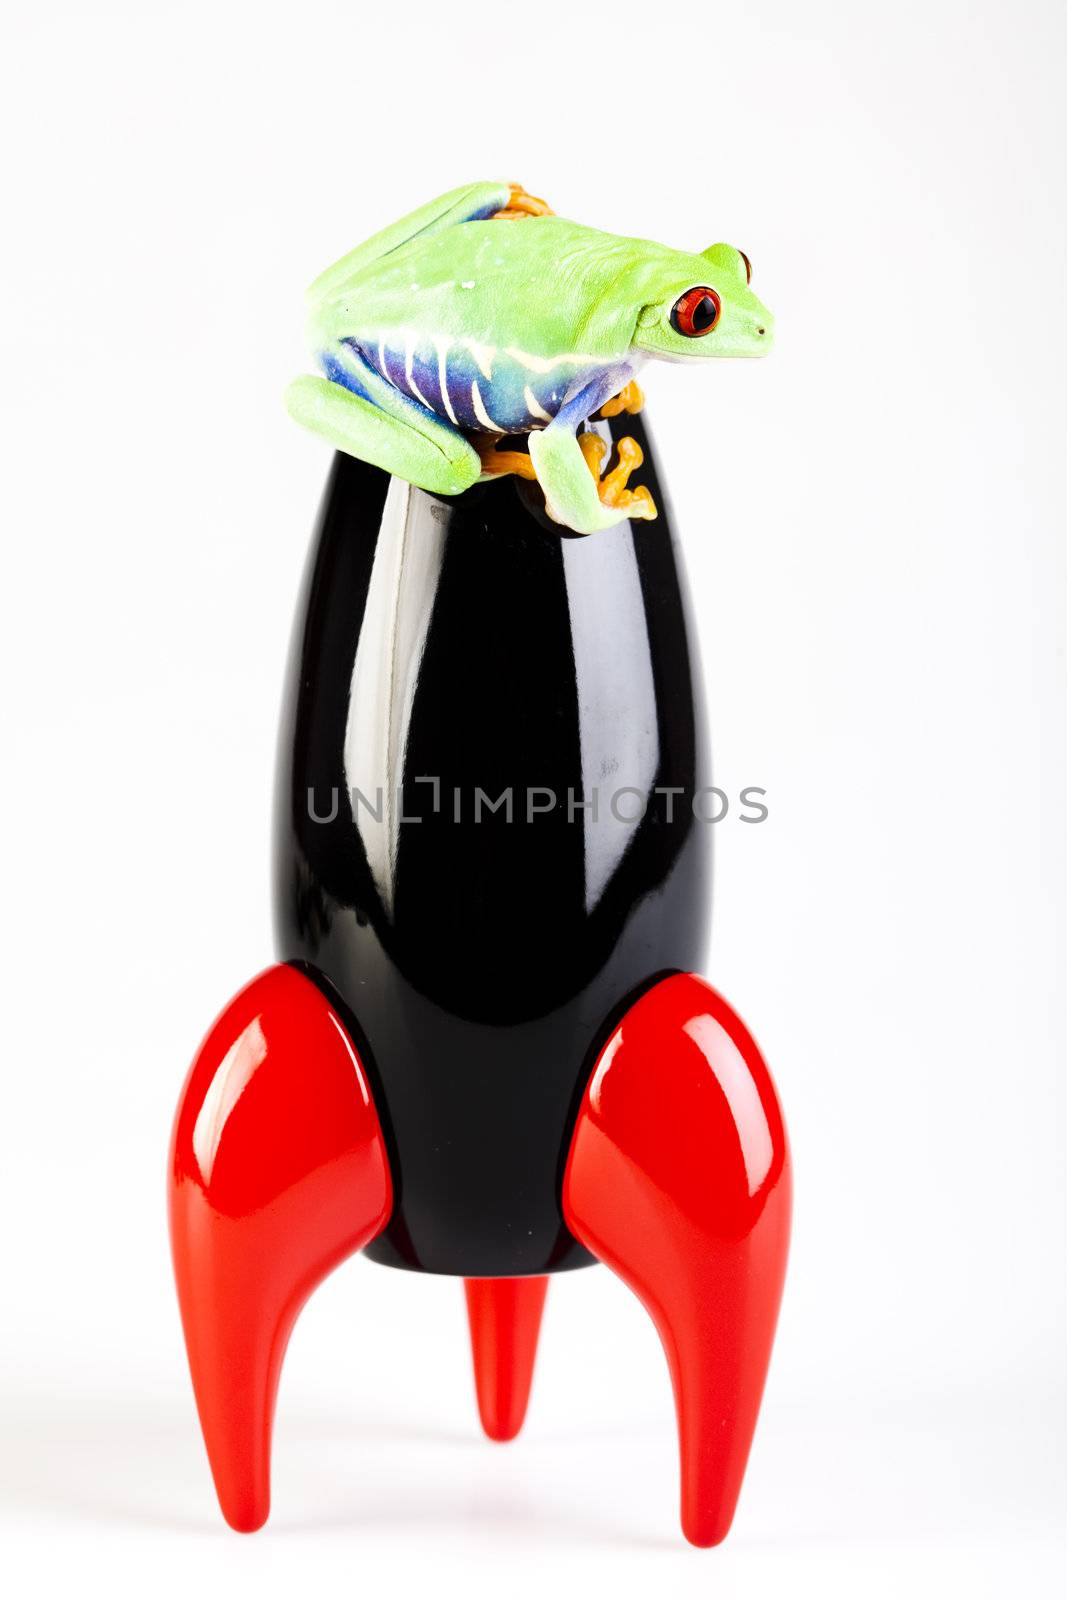 Rocket and frog by JanPietruszka